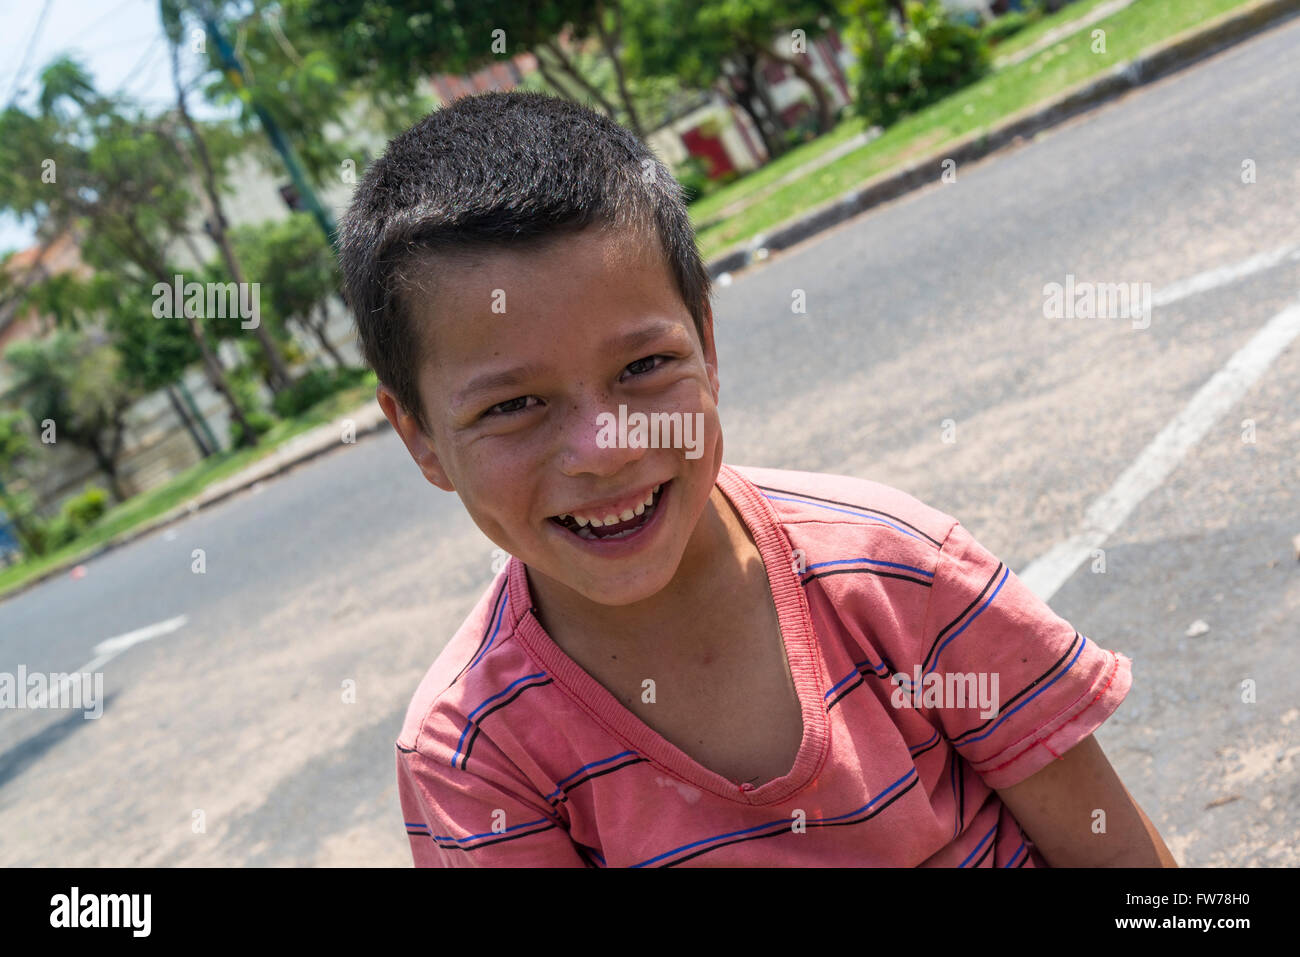 Guarani boy, Plaza de la Independencia, Asuncion, Paraguay Stock Photo